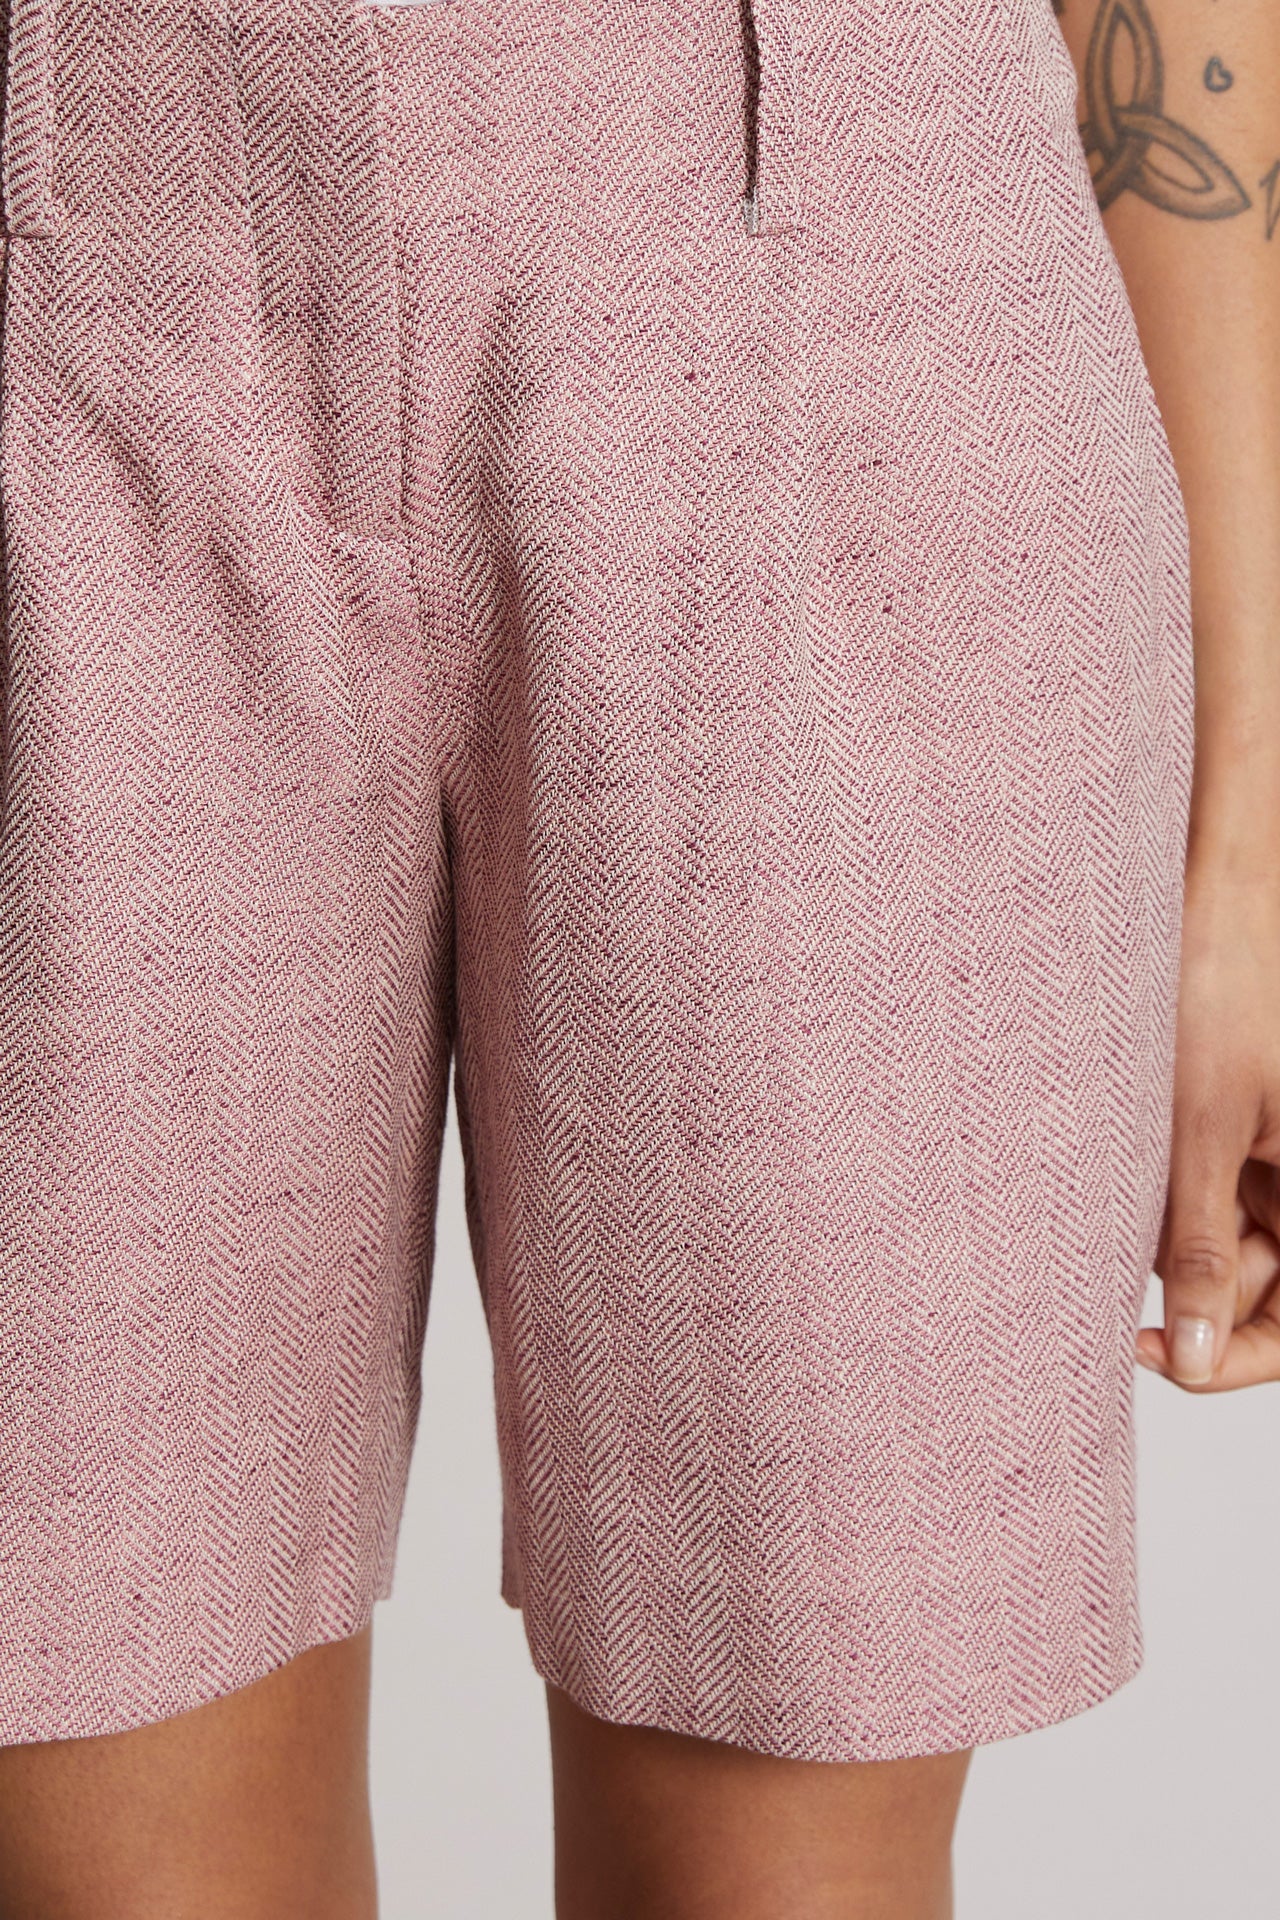 Vendicari shorts in cotton linen